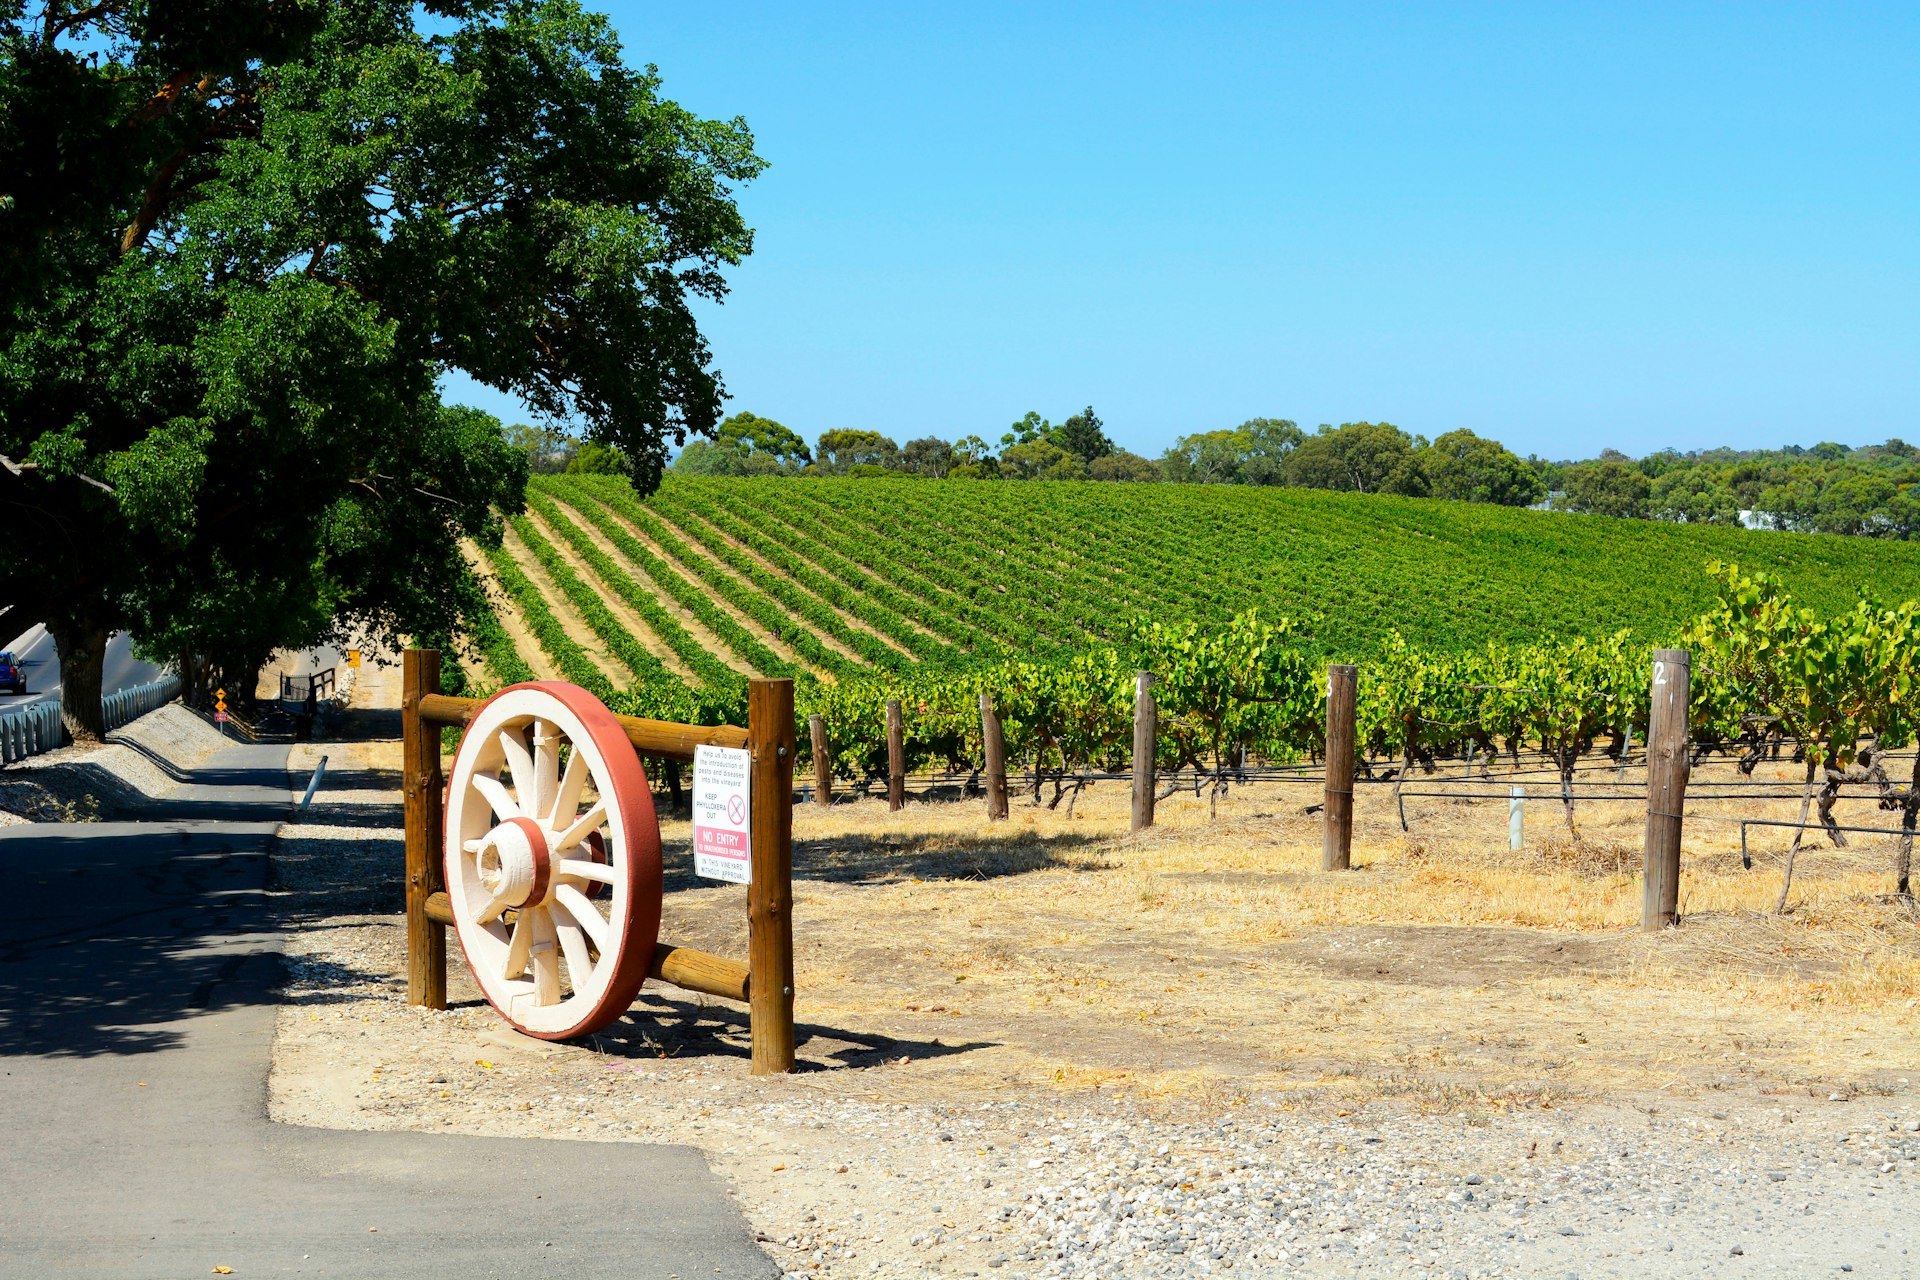 Rows of grape vines with wagen wheel gate, in Australia's major wine growing region, Barossa Valley South Australia.